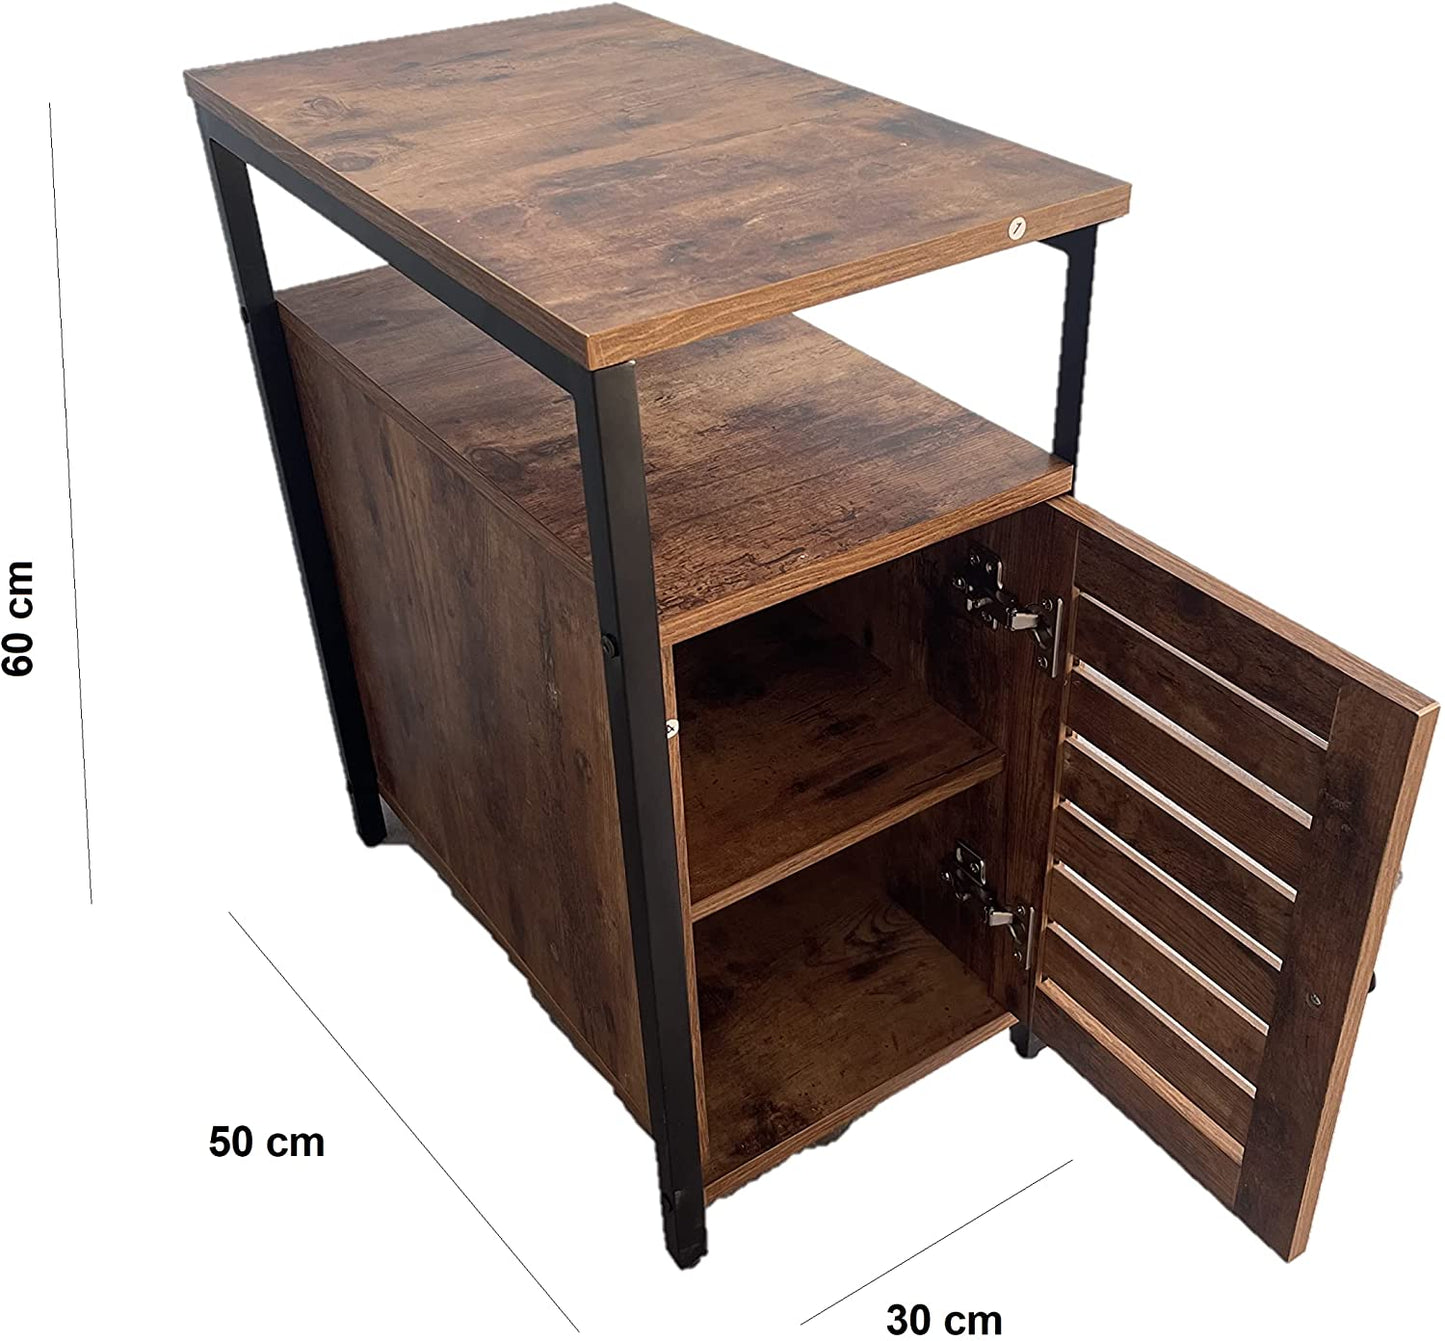 Industrial Rustic Wood/Steel Narrow End Sofa Side Table Shelf With Shutter Door Storage